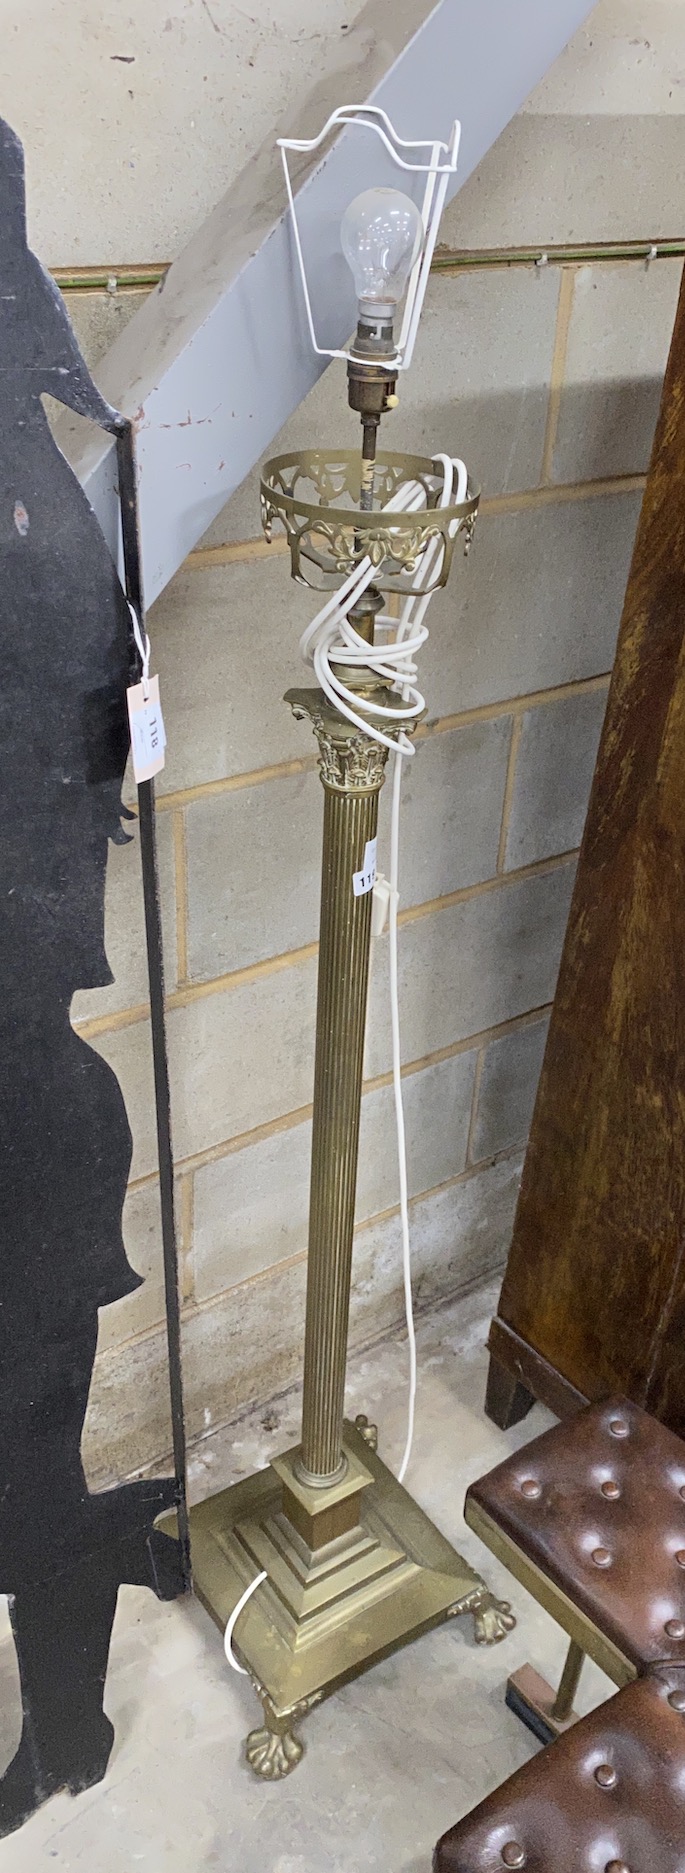 An Edwardian brass Corinthian column telescopic oil standard lamp converted to electricity